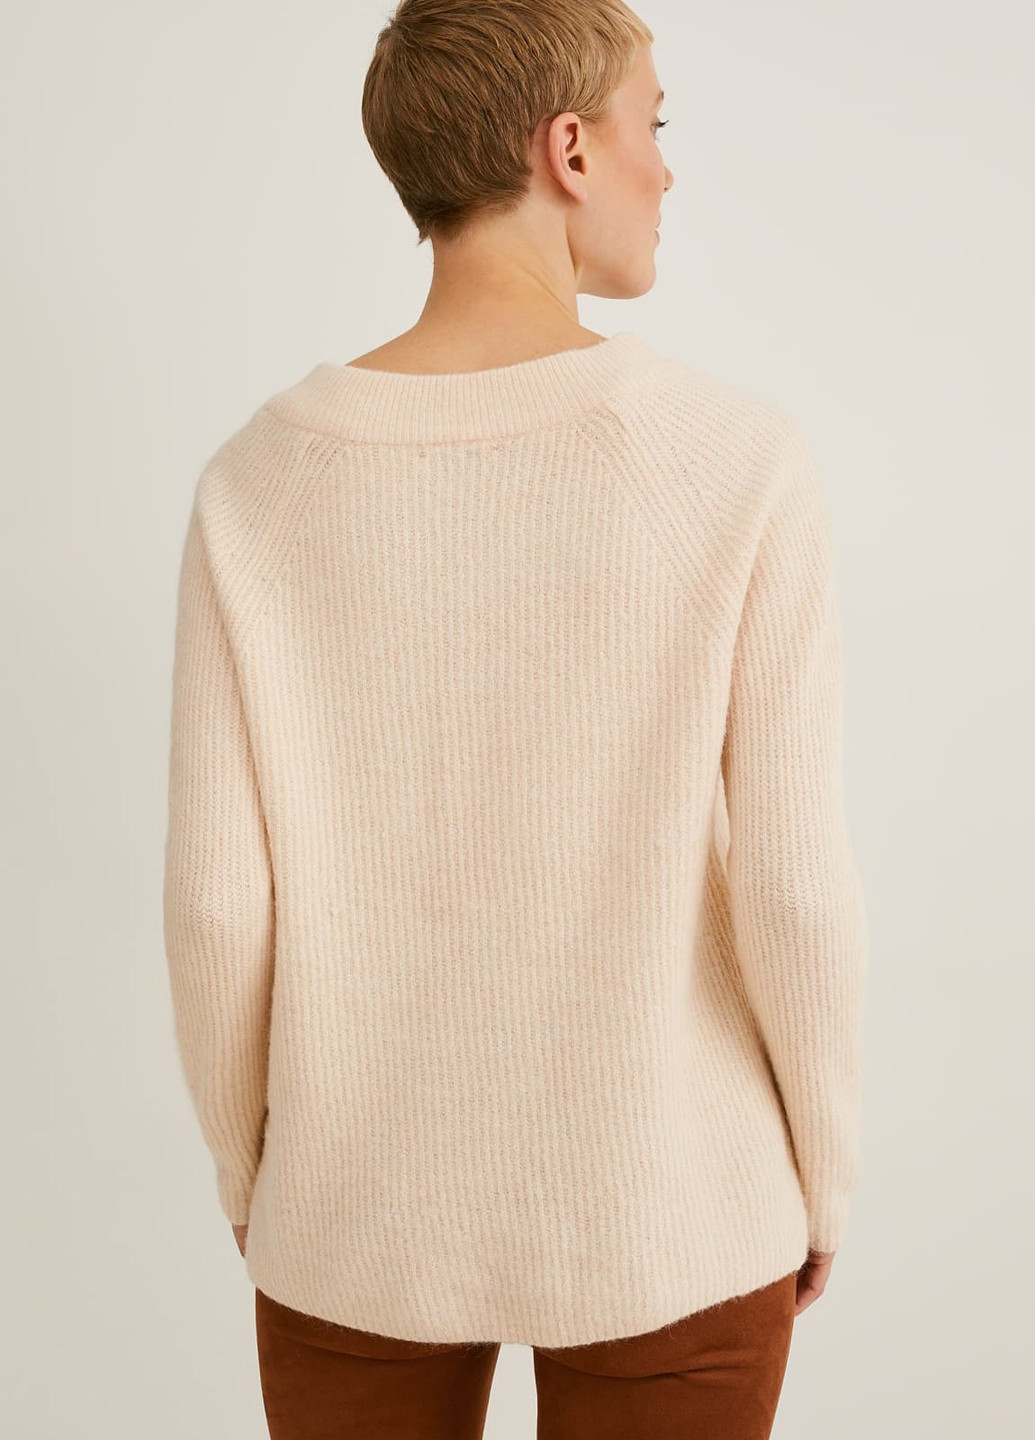 Бежевый демисезонный свитер пуловер C&A